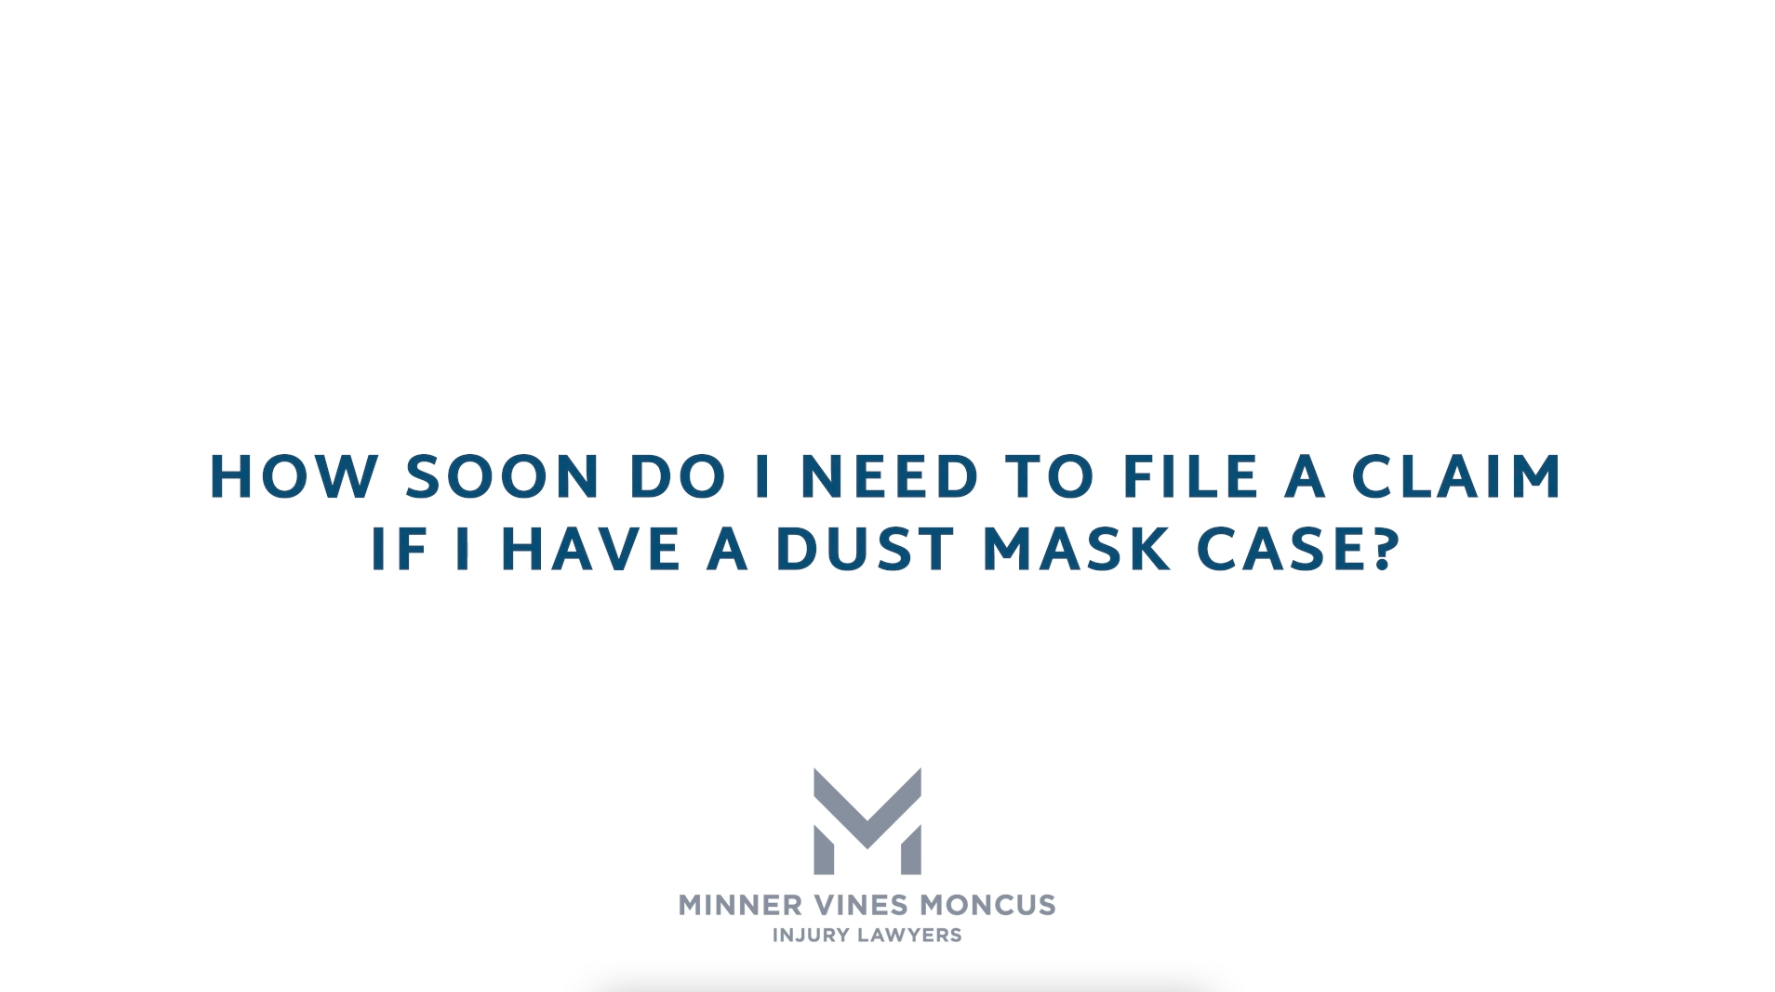 How soon do I need to file a claim if I have a dust mask case?